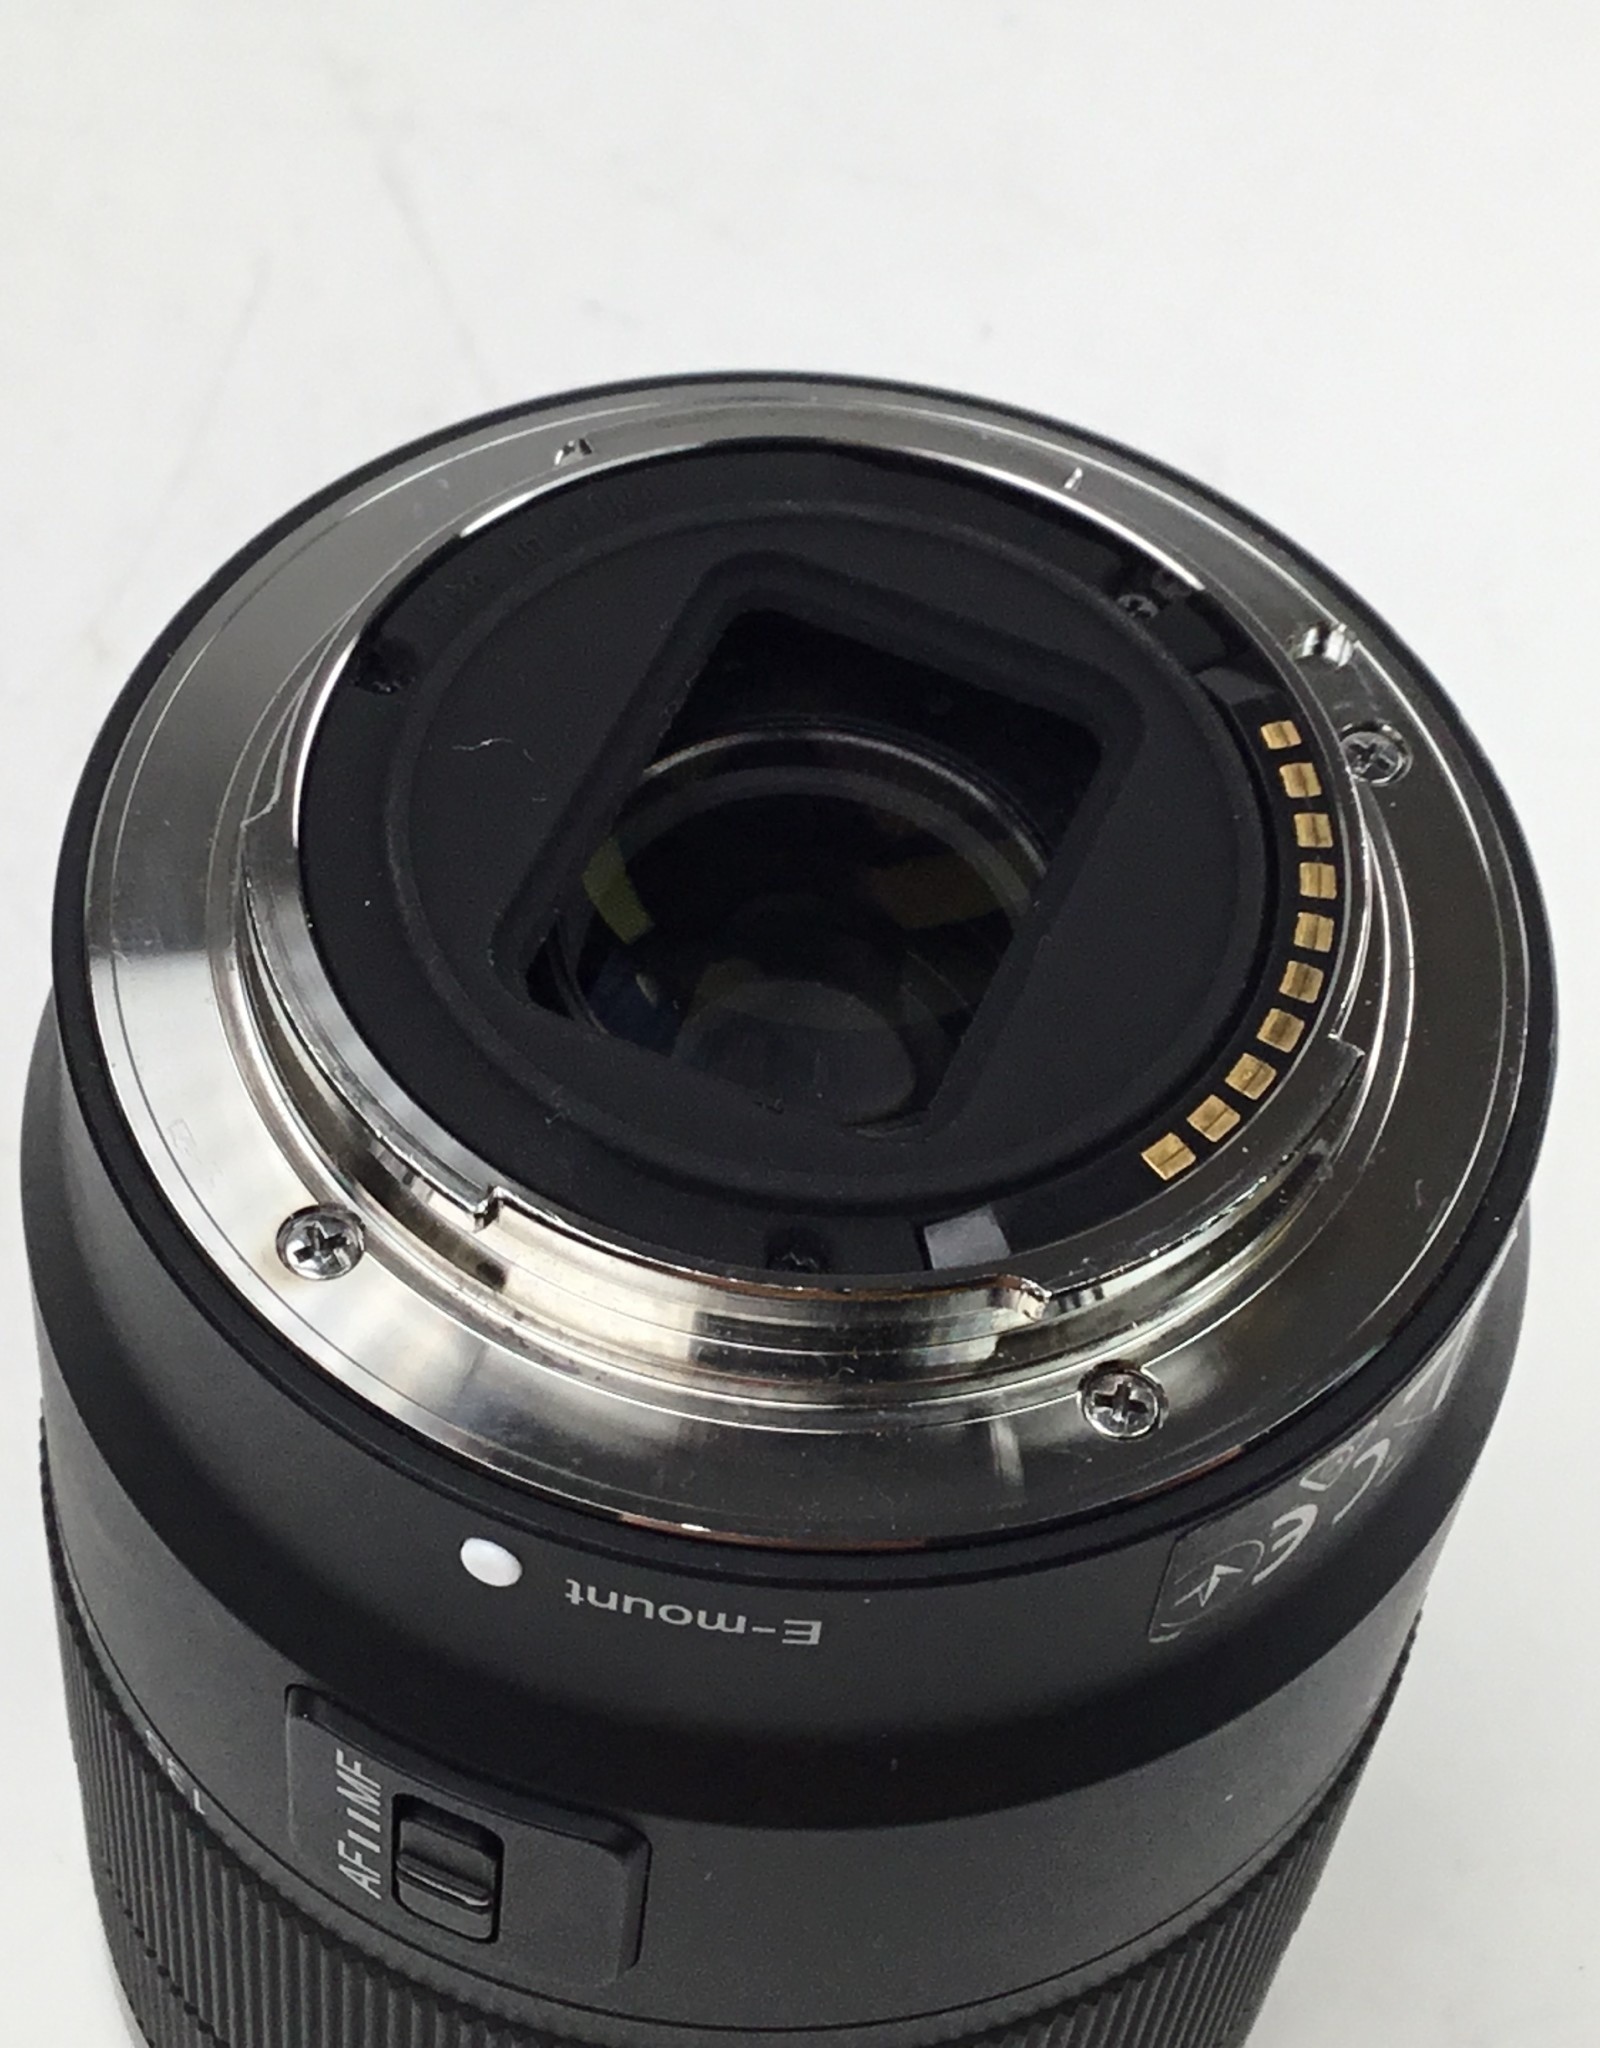 SONY Sony E 18-135mm f3.5-5.6 OSS Lens Used Good